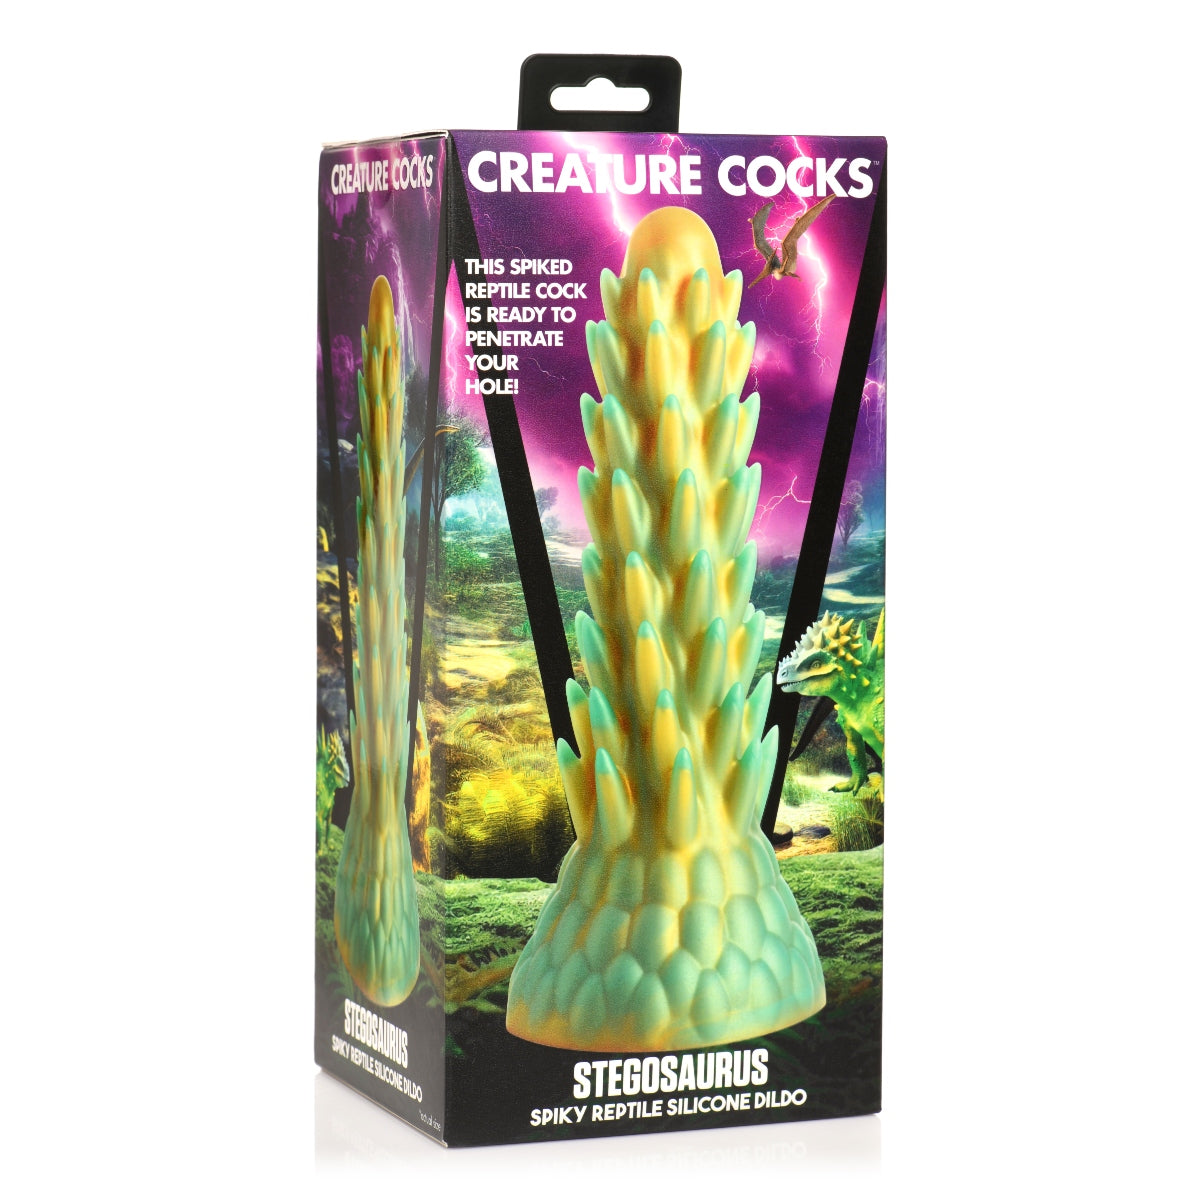 Creature Cocks Stegosaurus Spiky Reptile Silicone Dildo Gold Teal - Simply Pleasure